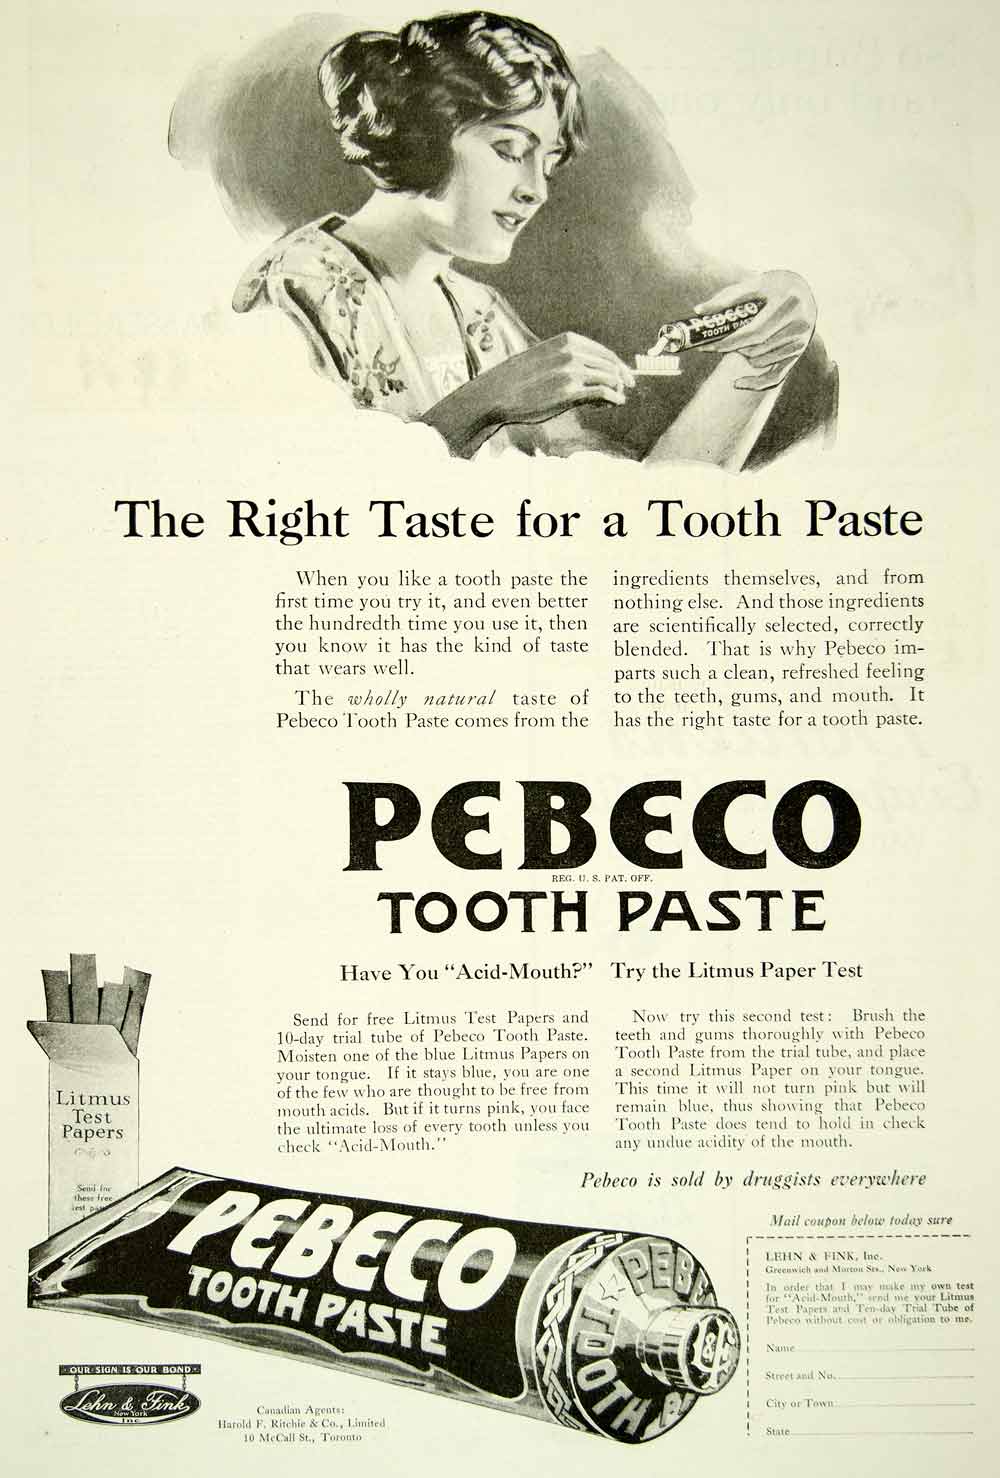 1920 Ad Pebeco Toothpaste Dental Hygiene 10 McCall St Toronto Litmus Test YDL9